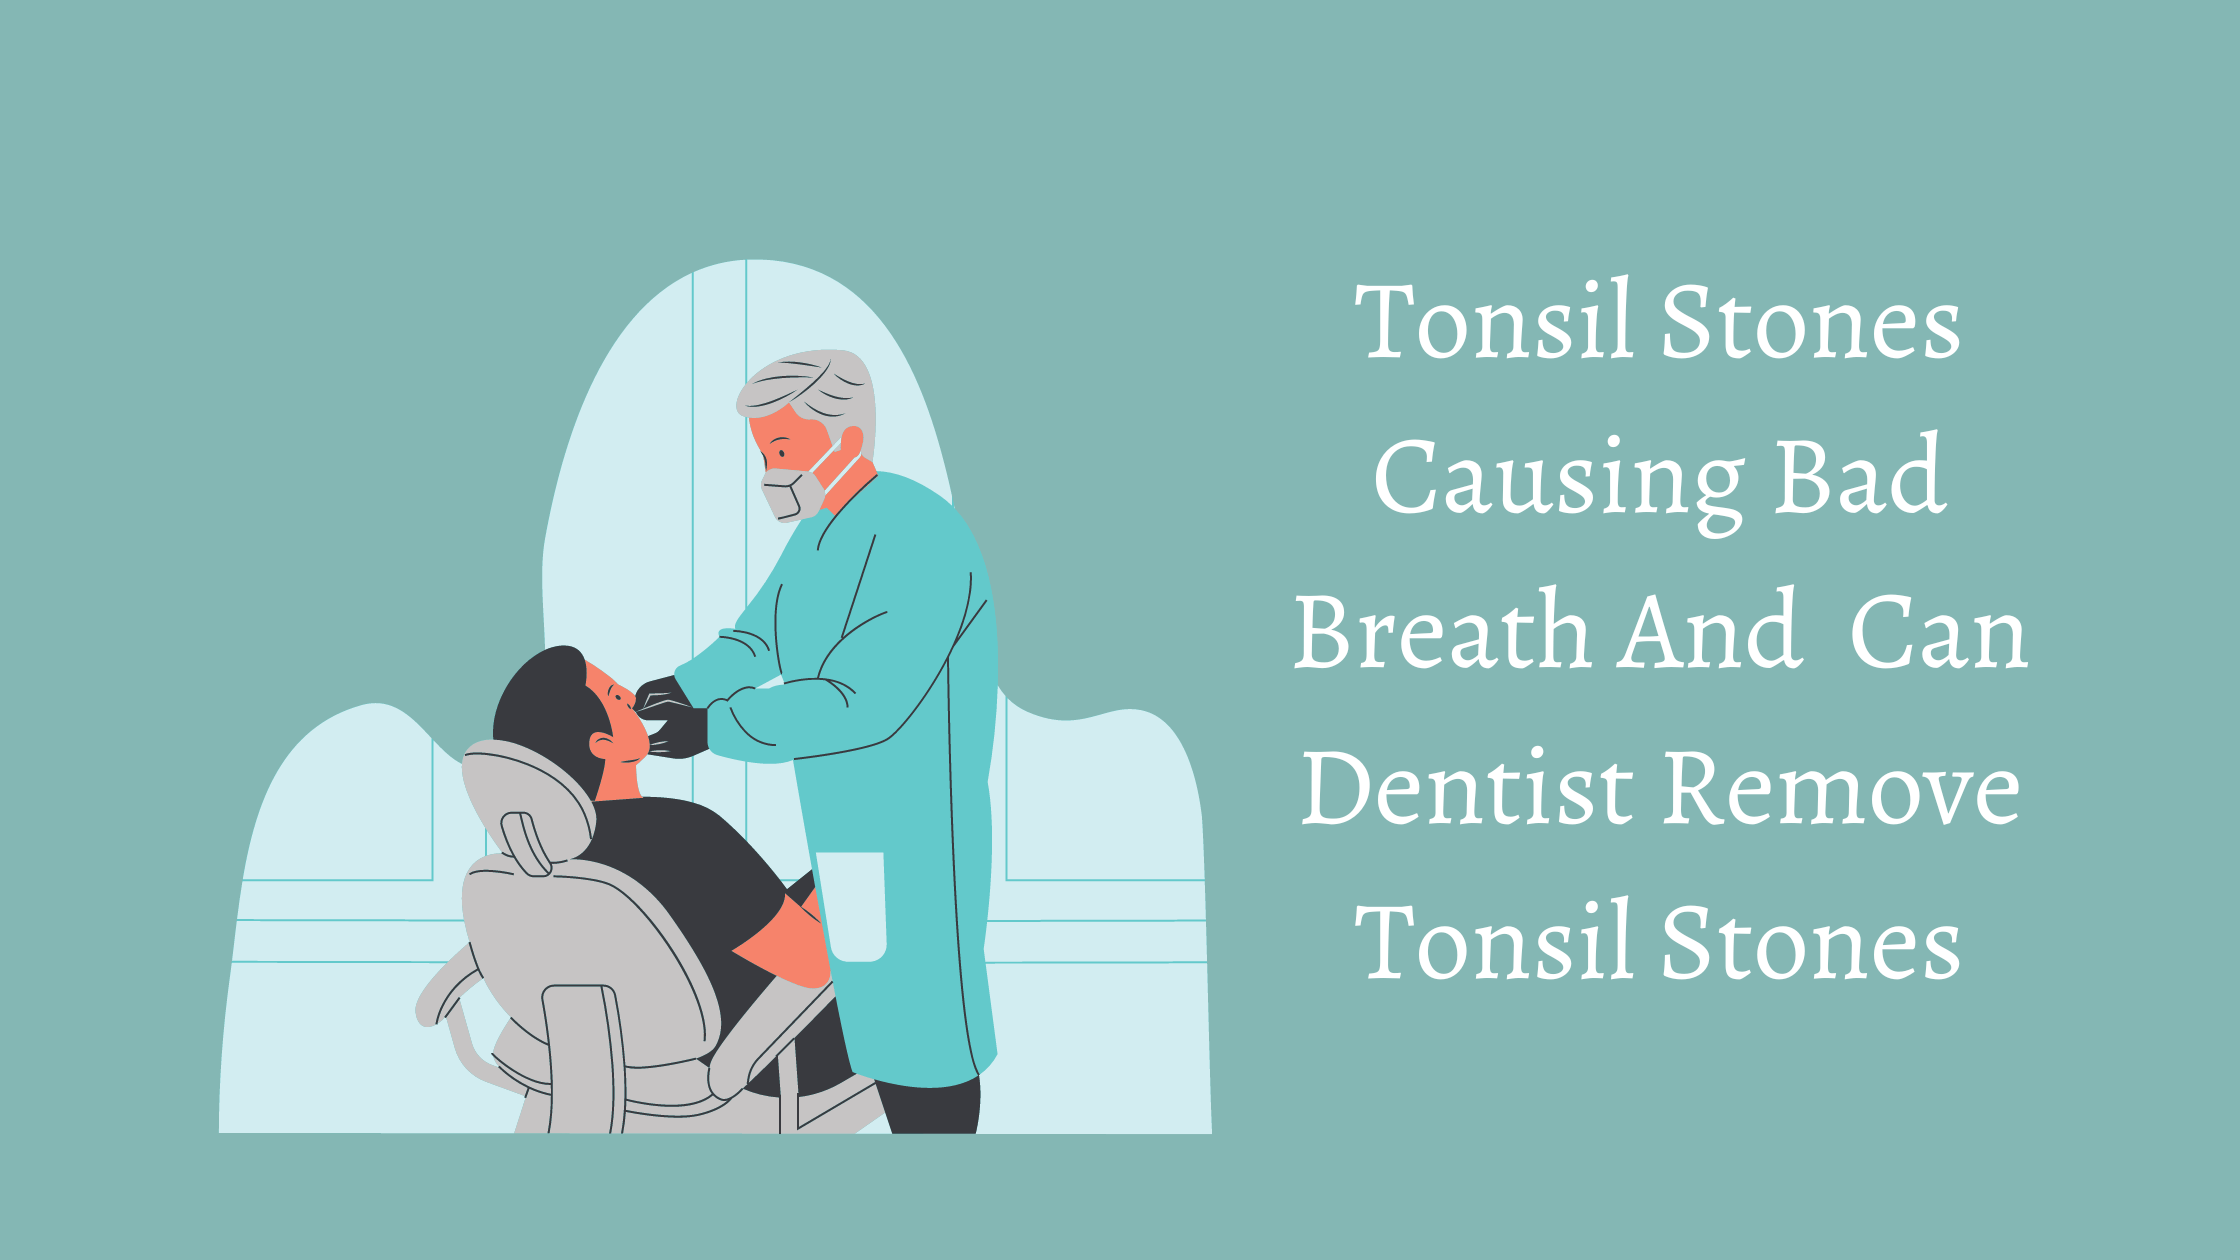 Tonsil stones,